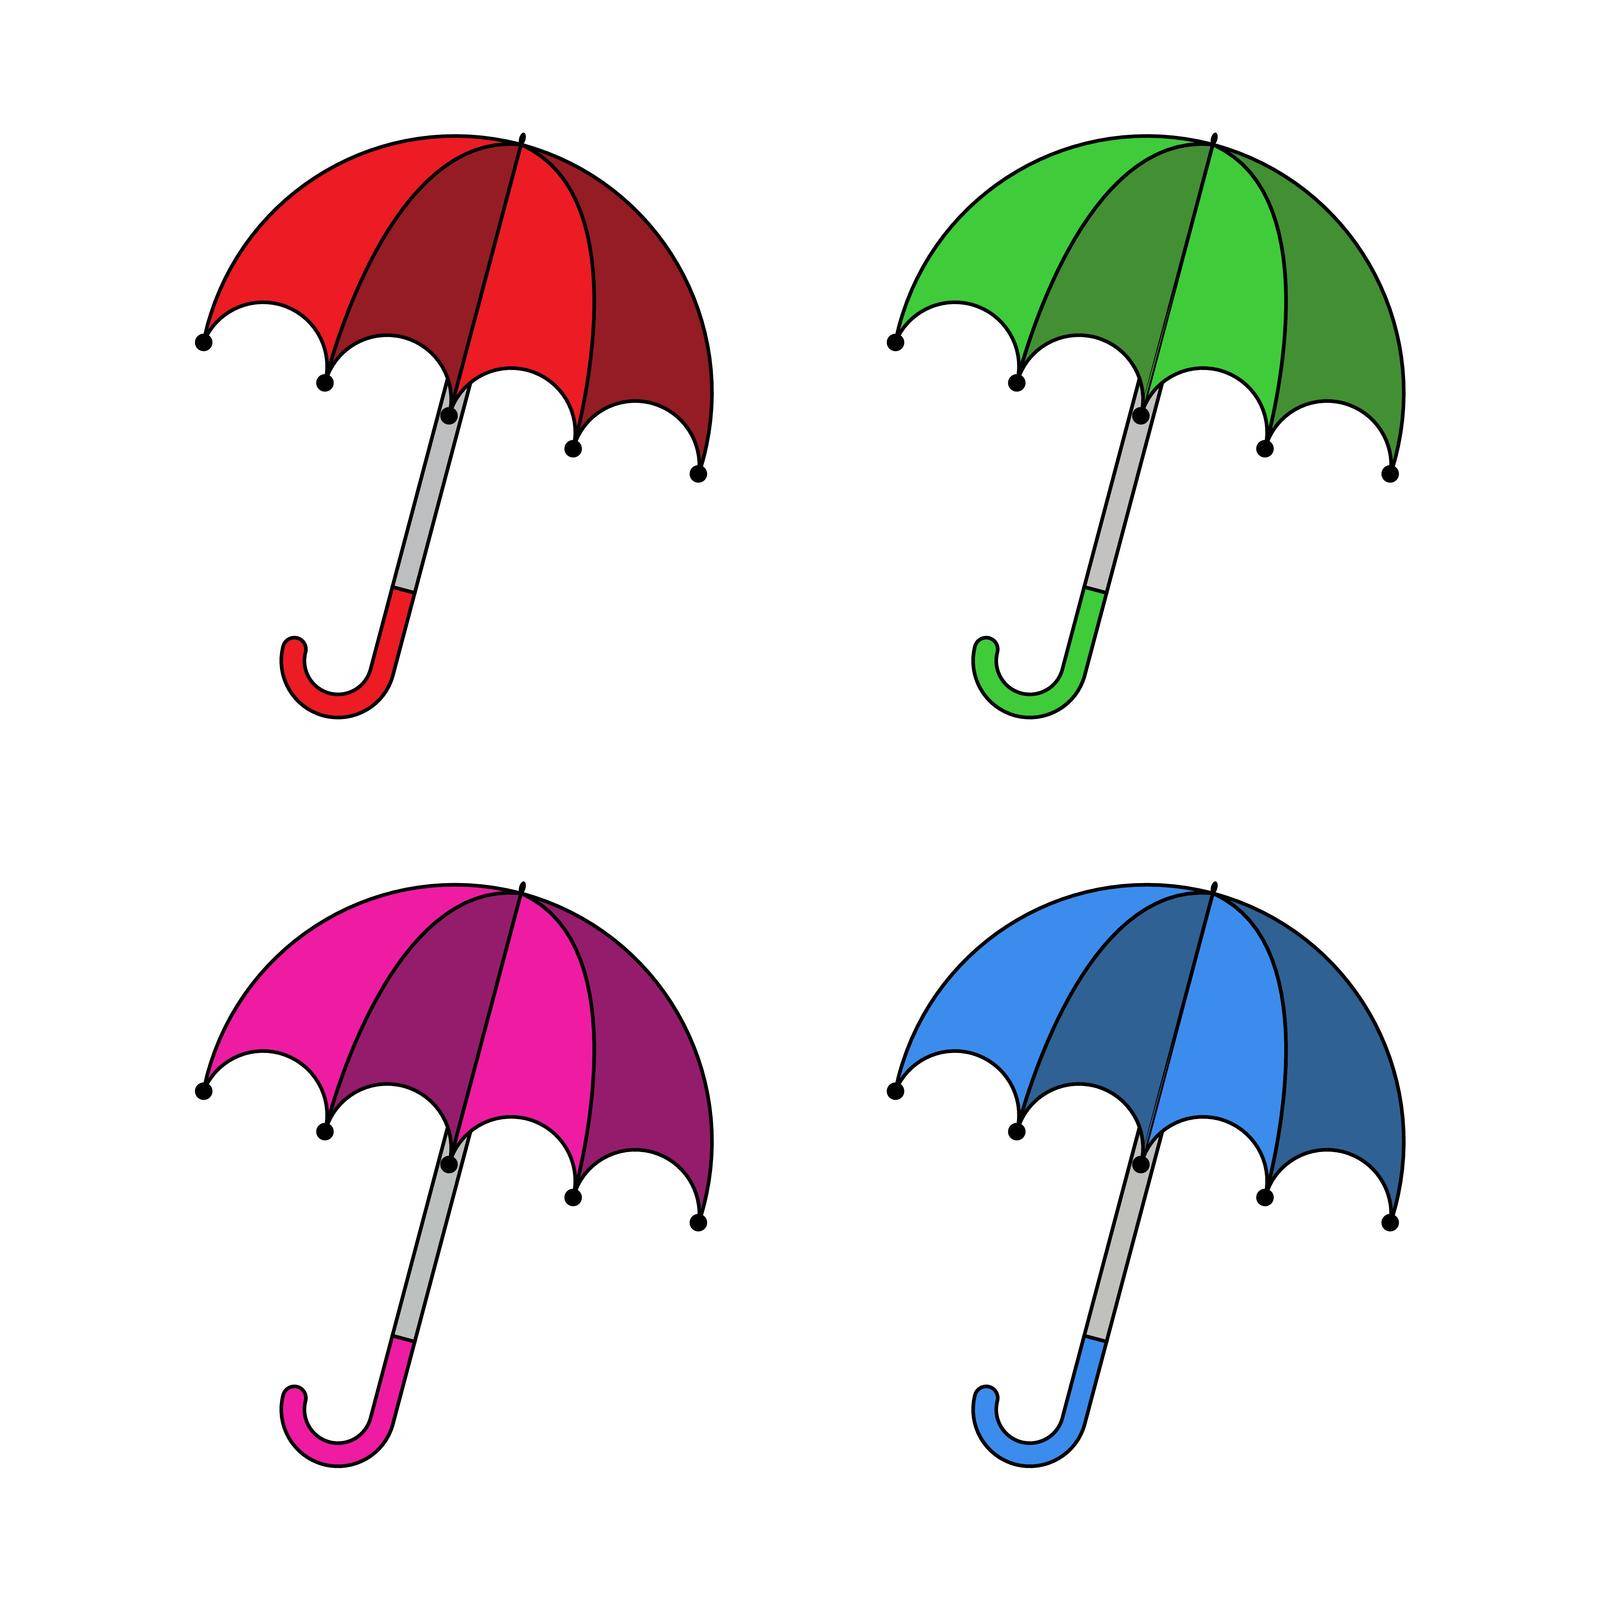 Umbrella icon set. Open parasol clip art. Vector illustration isolated on white background. Classic rain protect autumn symbol.